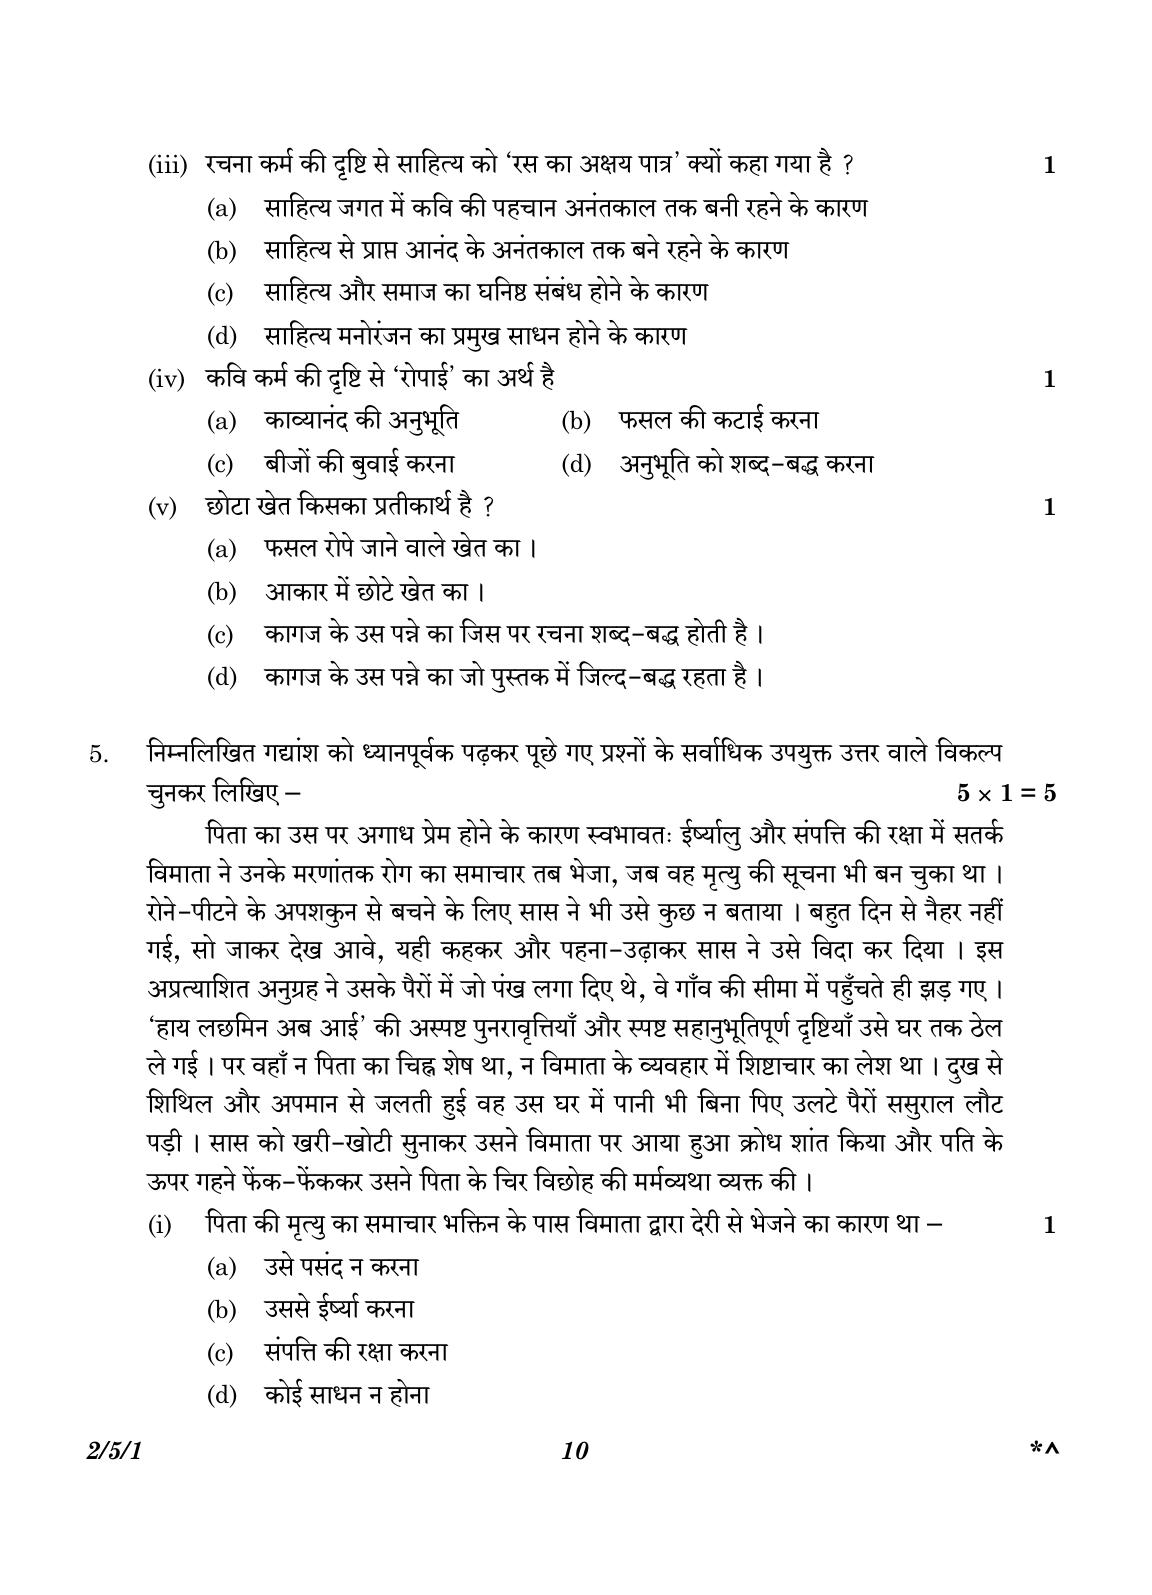 CBSE Class 12 2-5-1 Hindi Core version 2023 Question Paper - Page 10